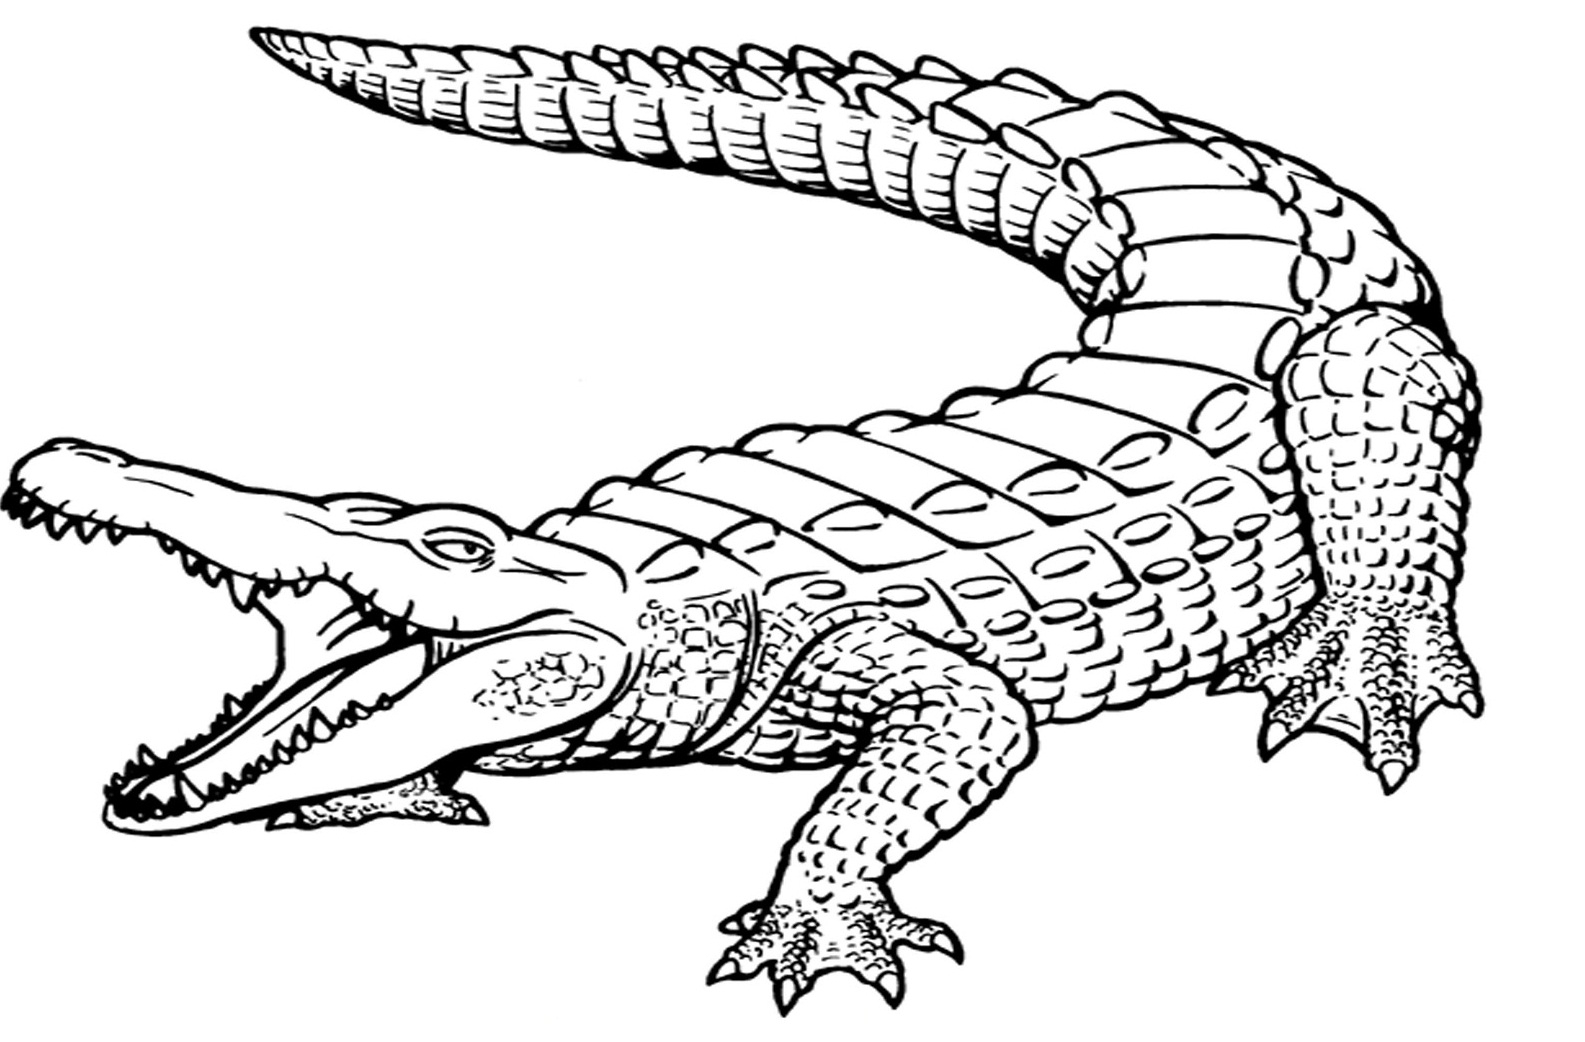 nile-crocodile-coloring-page-at-getdrawings-free-download